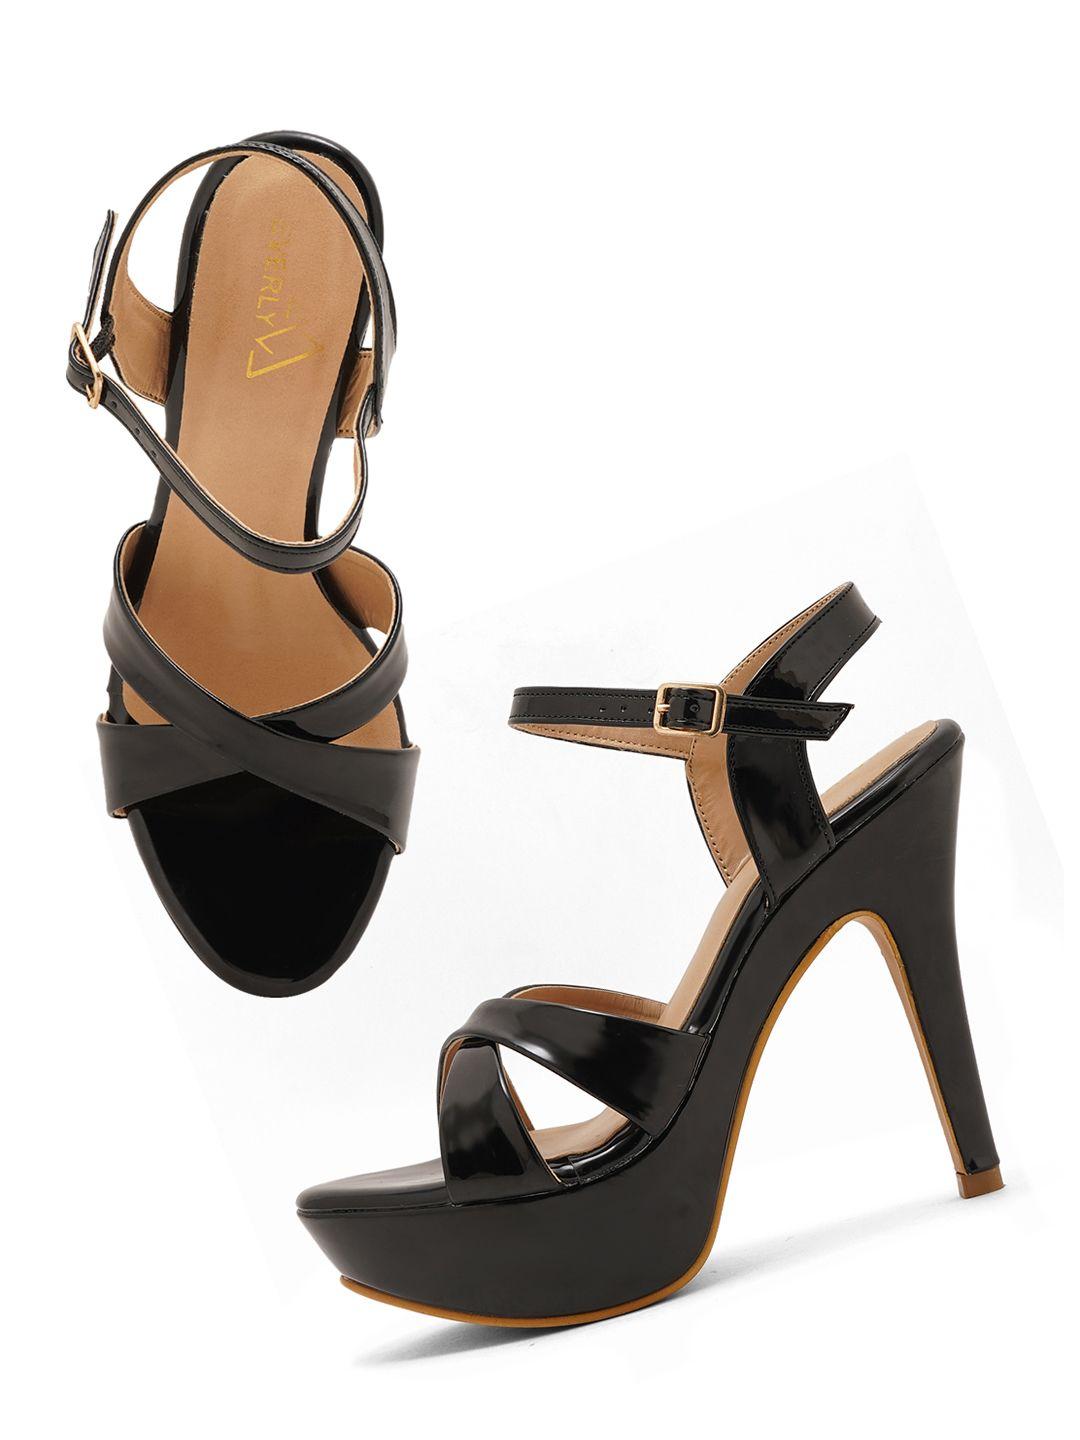 everly black stiletto heels